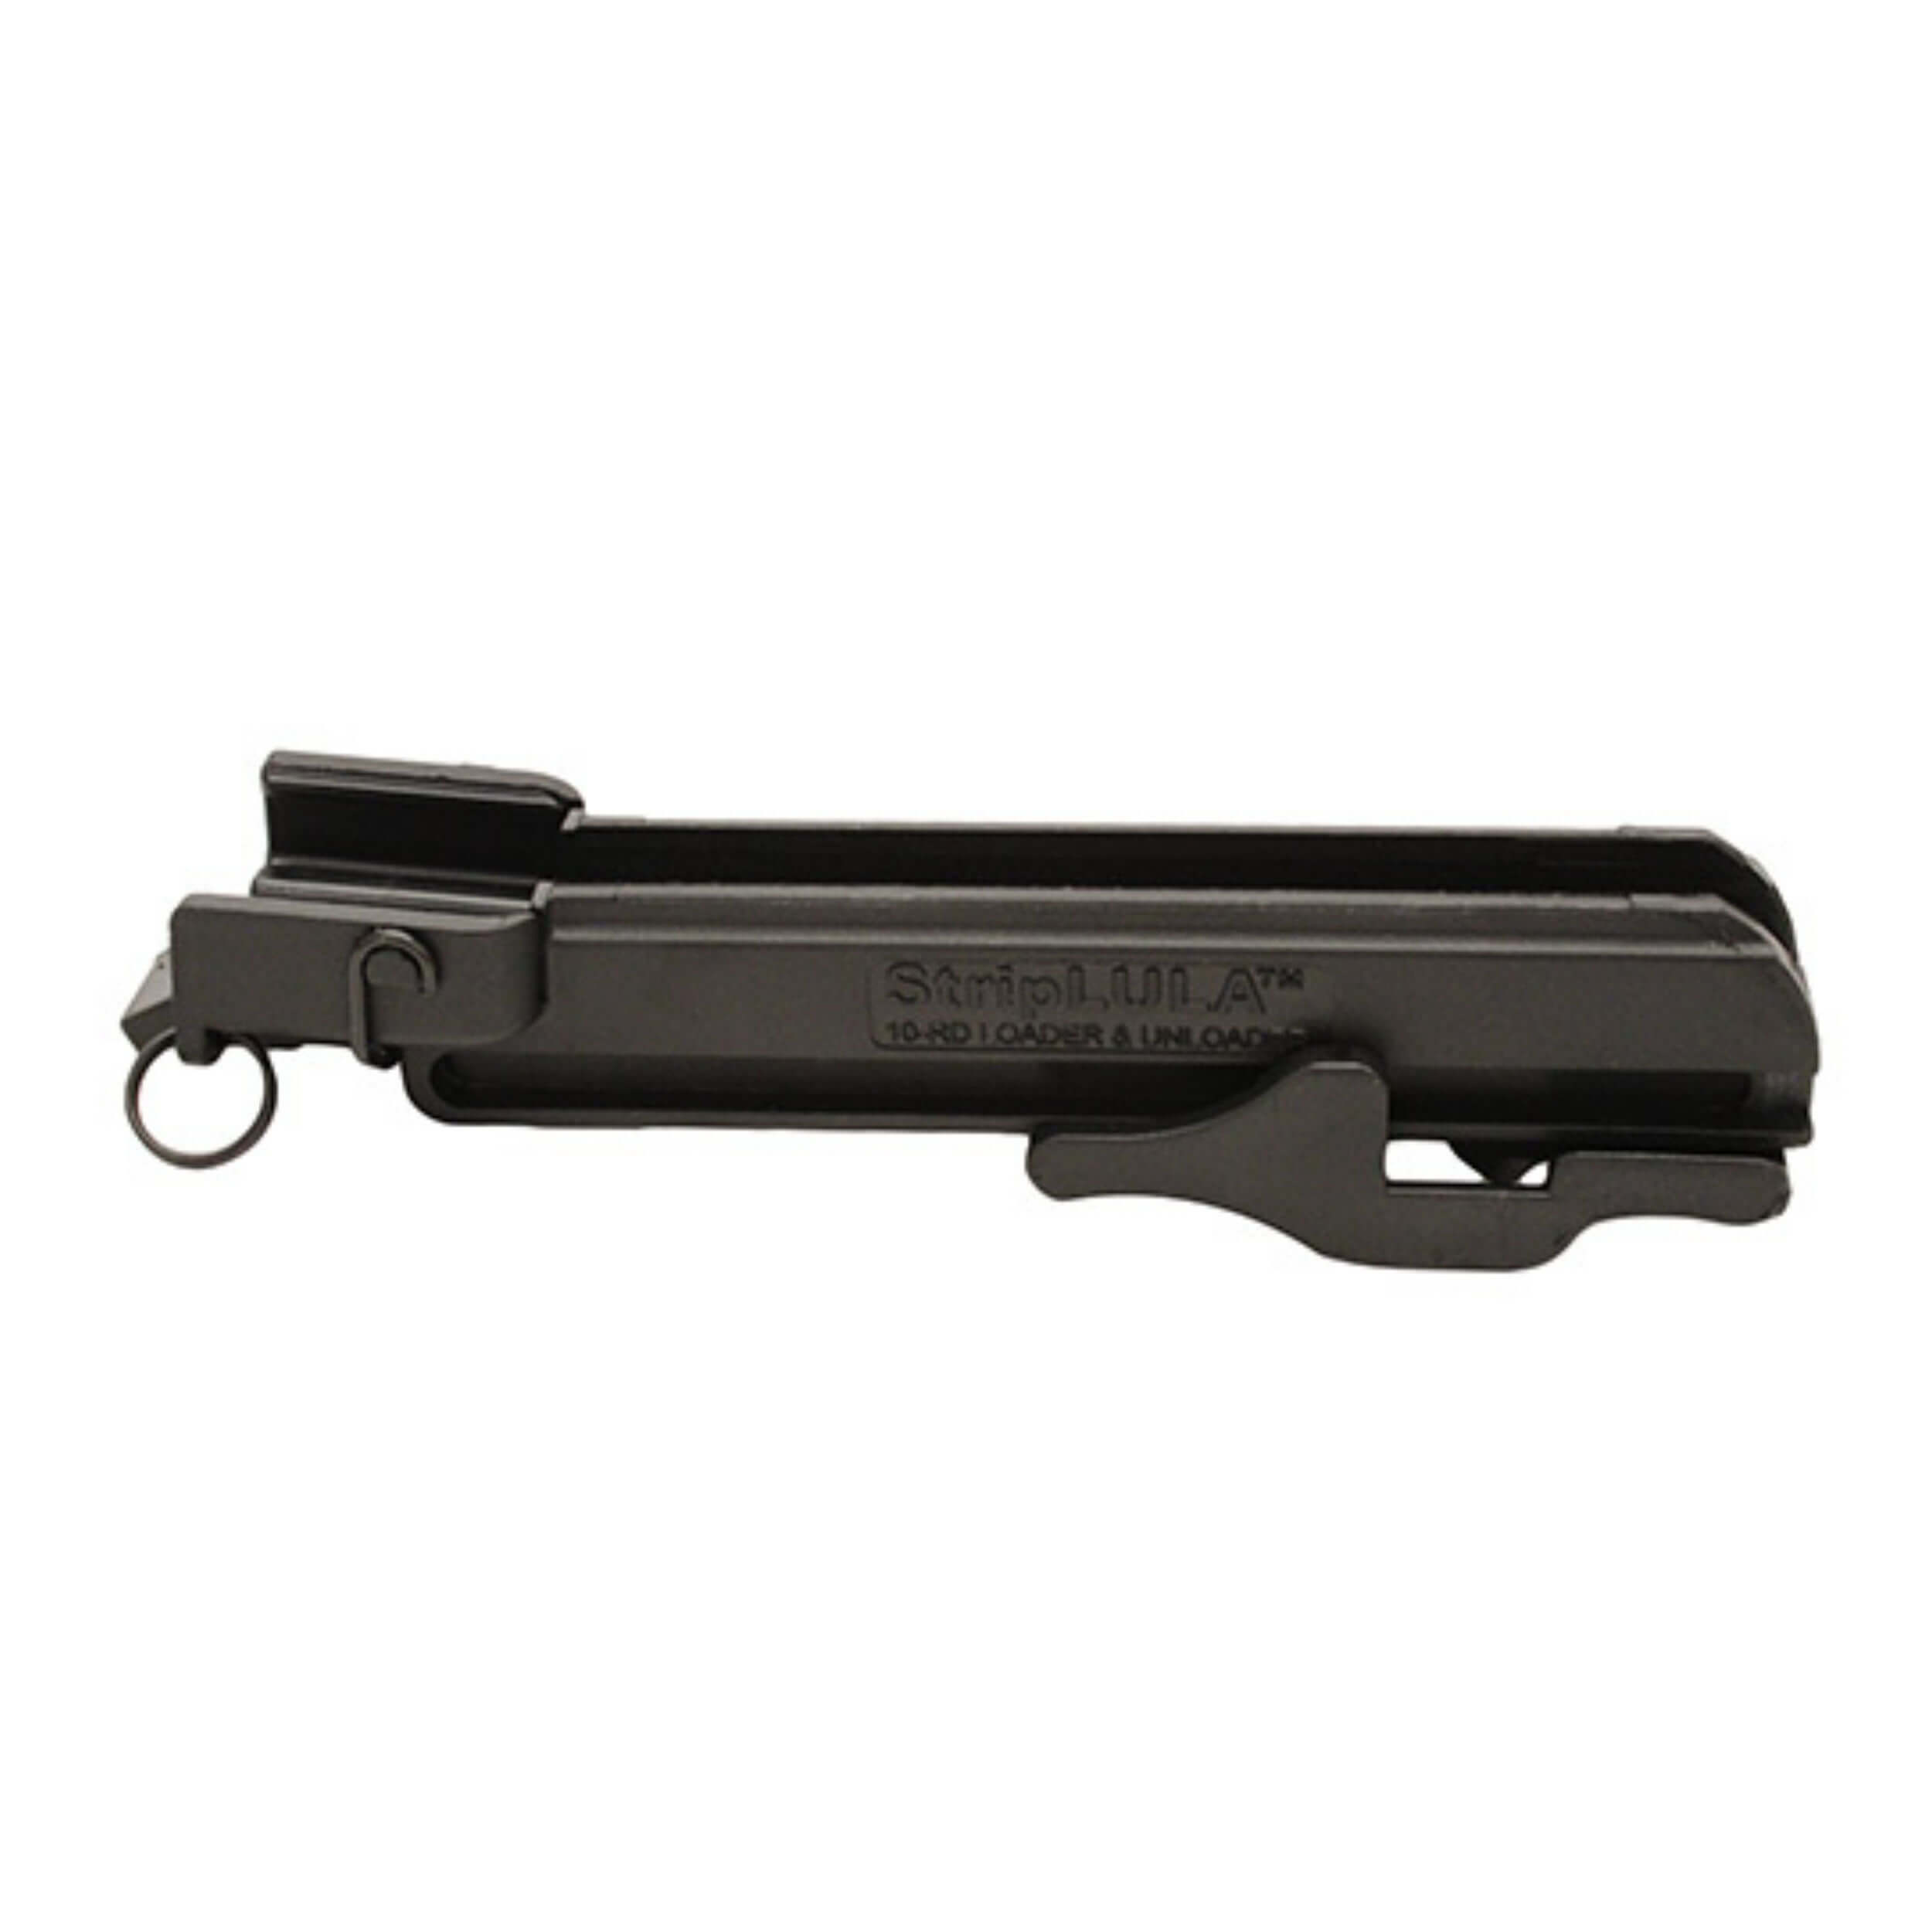 maglula® AR15 / HK416 5.56 StripLULA® Gen II 10-round magazine loader – Black SL50B